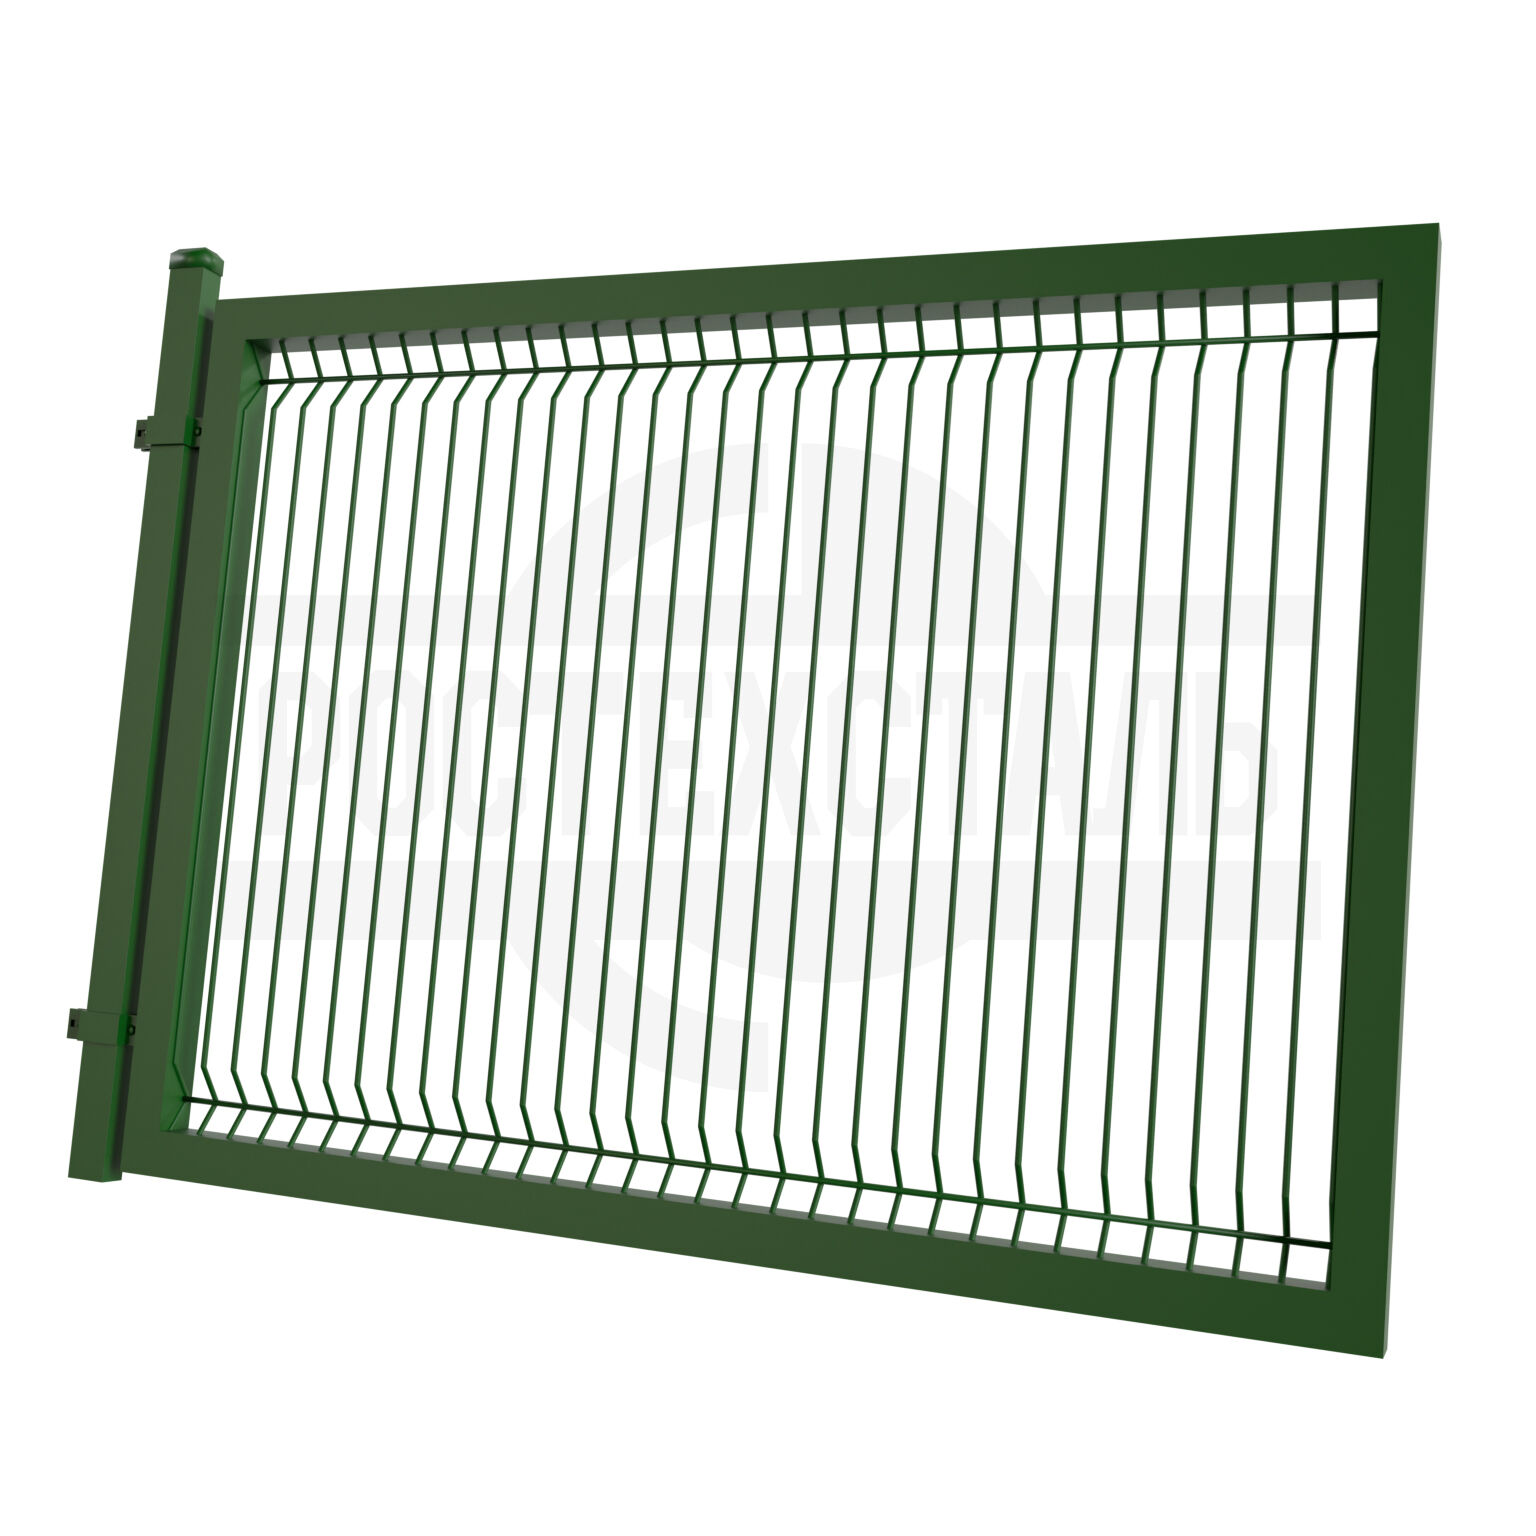 Ворота для 3D забора зеленые (RAL 6005) откатные 3000х6000 мм